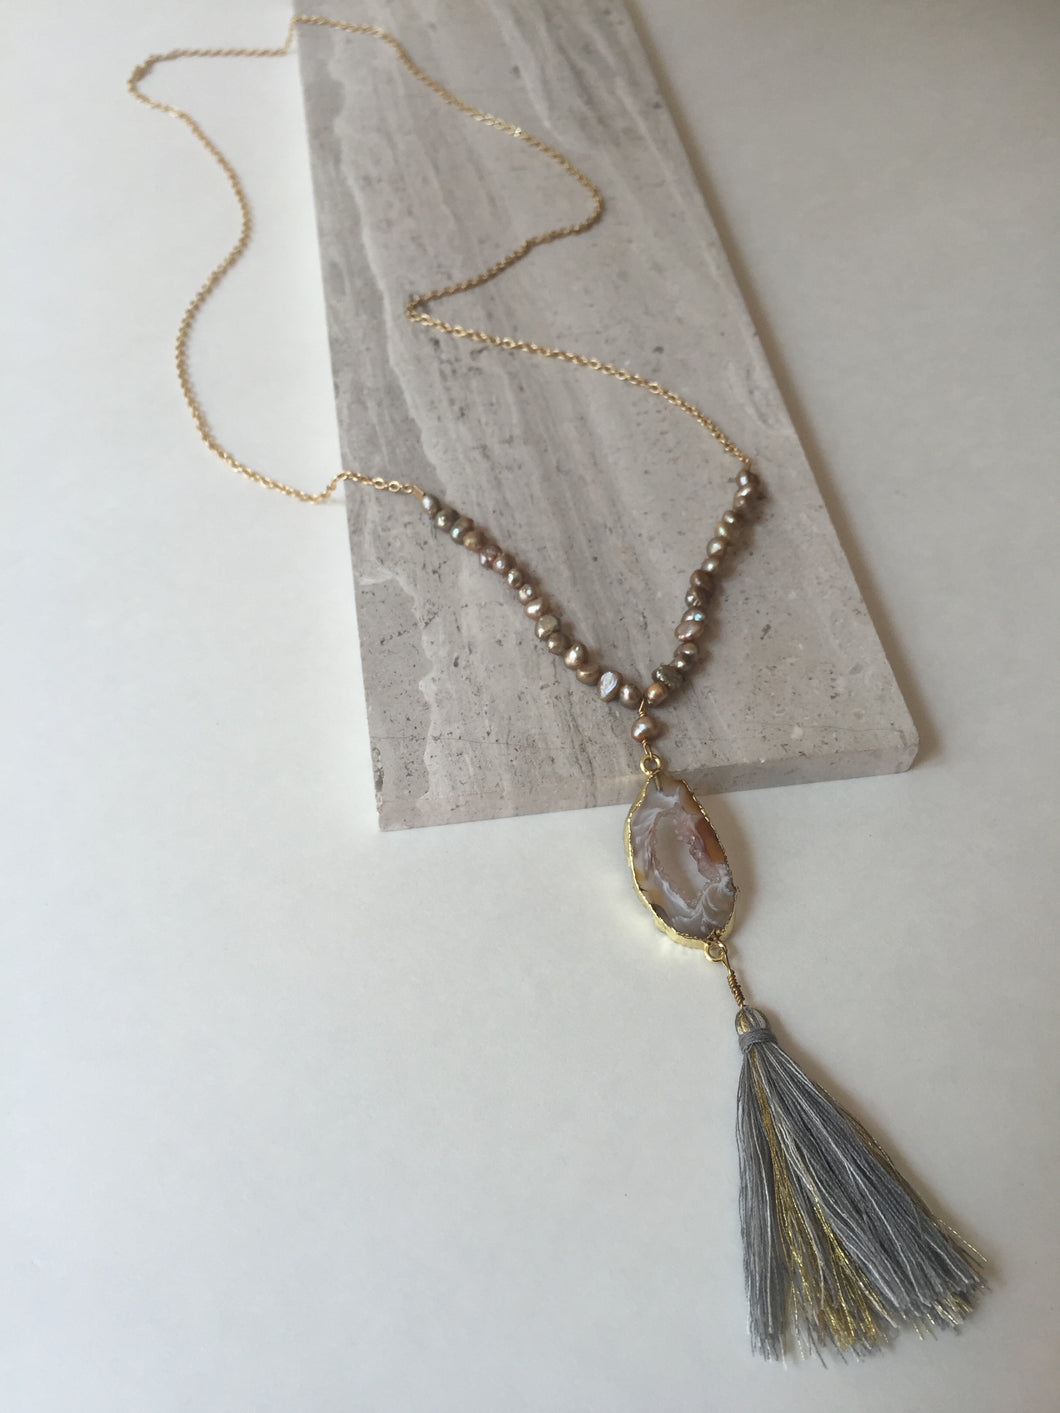 Geode Tassel Necklace long, gold